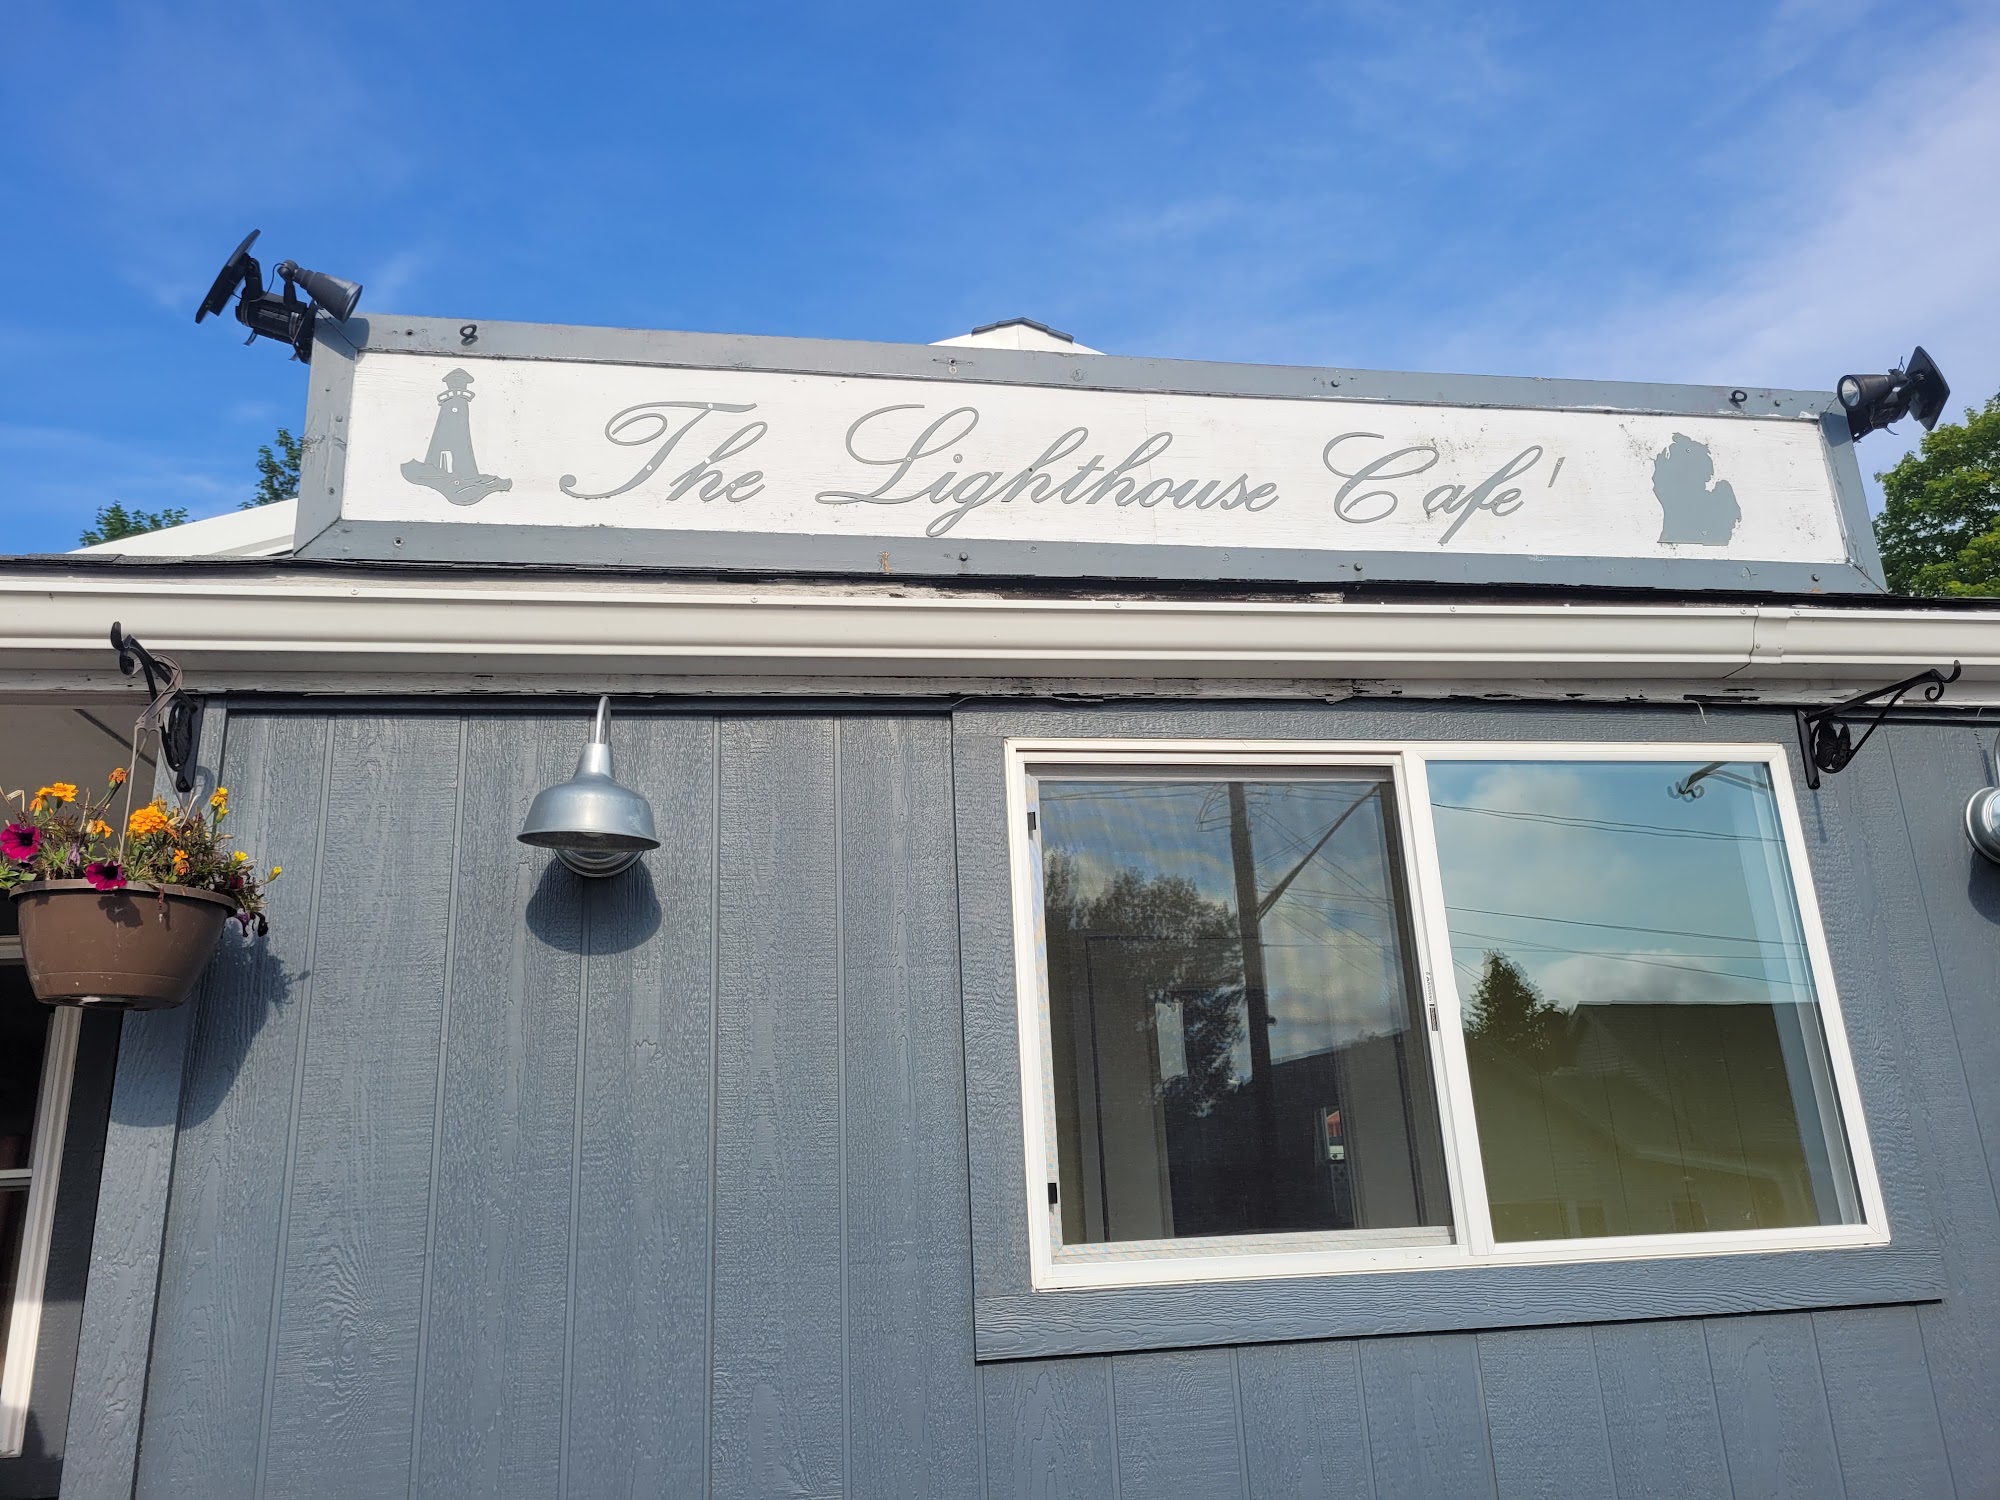 The Lighthouse Cafe